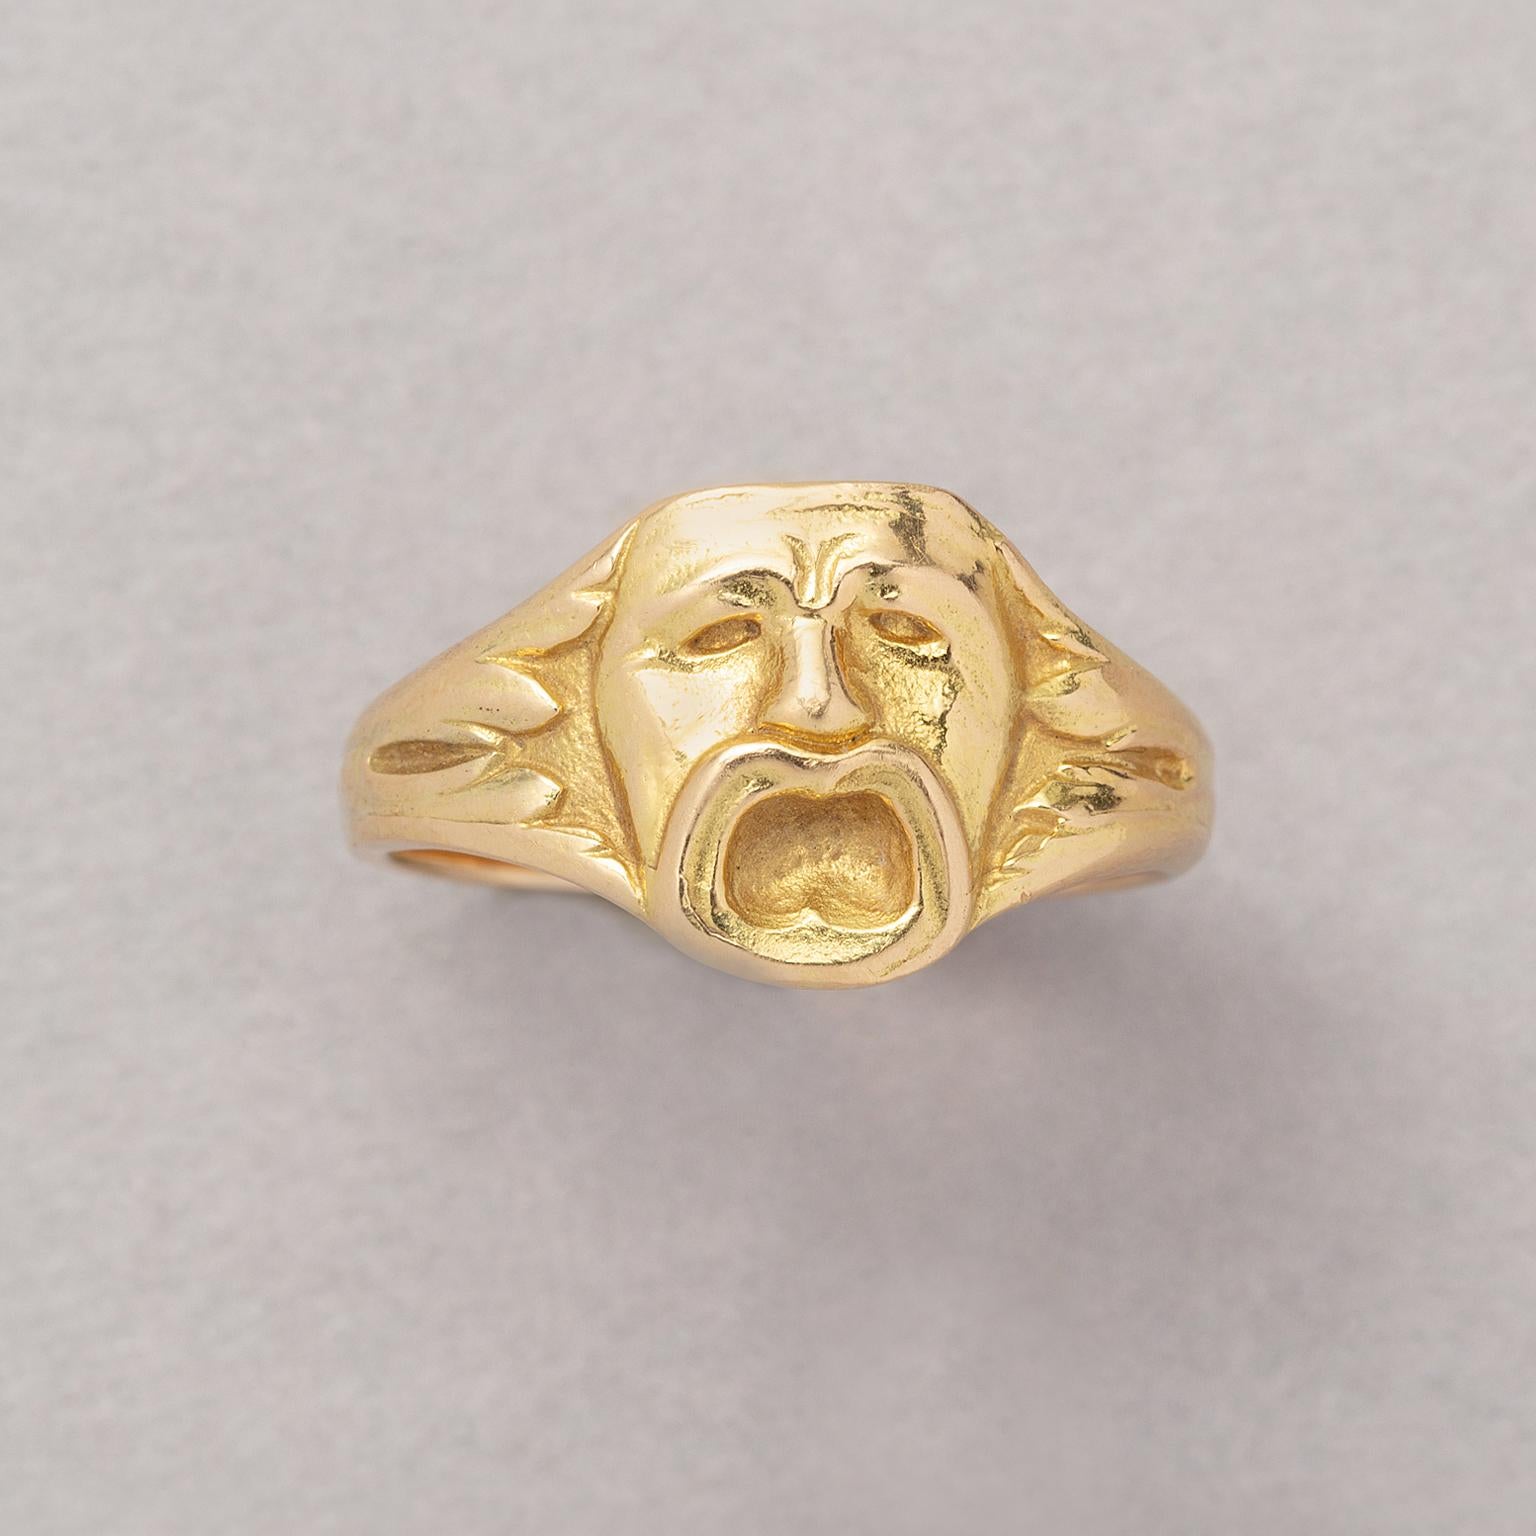 A Rare 18 Carat Gold Art Nouveau Theater Mask Ring  For Sale 1